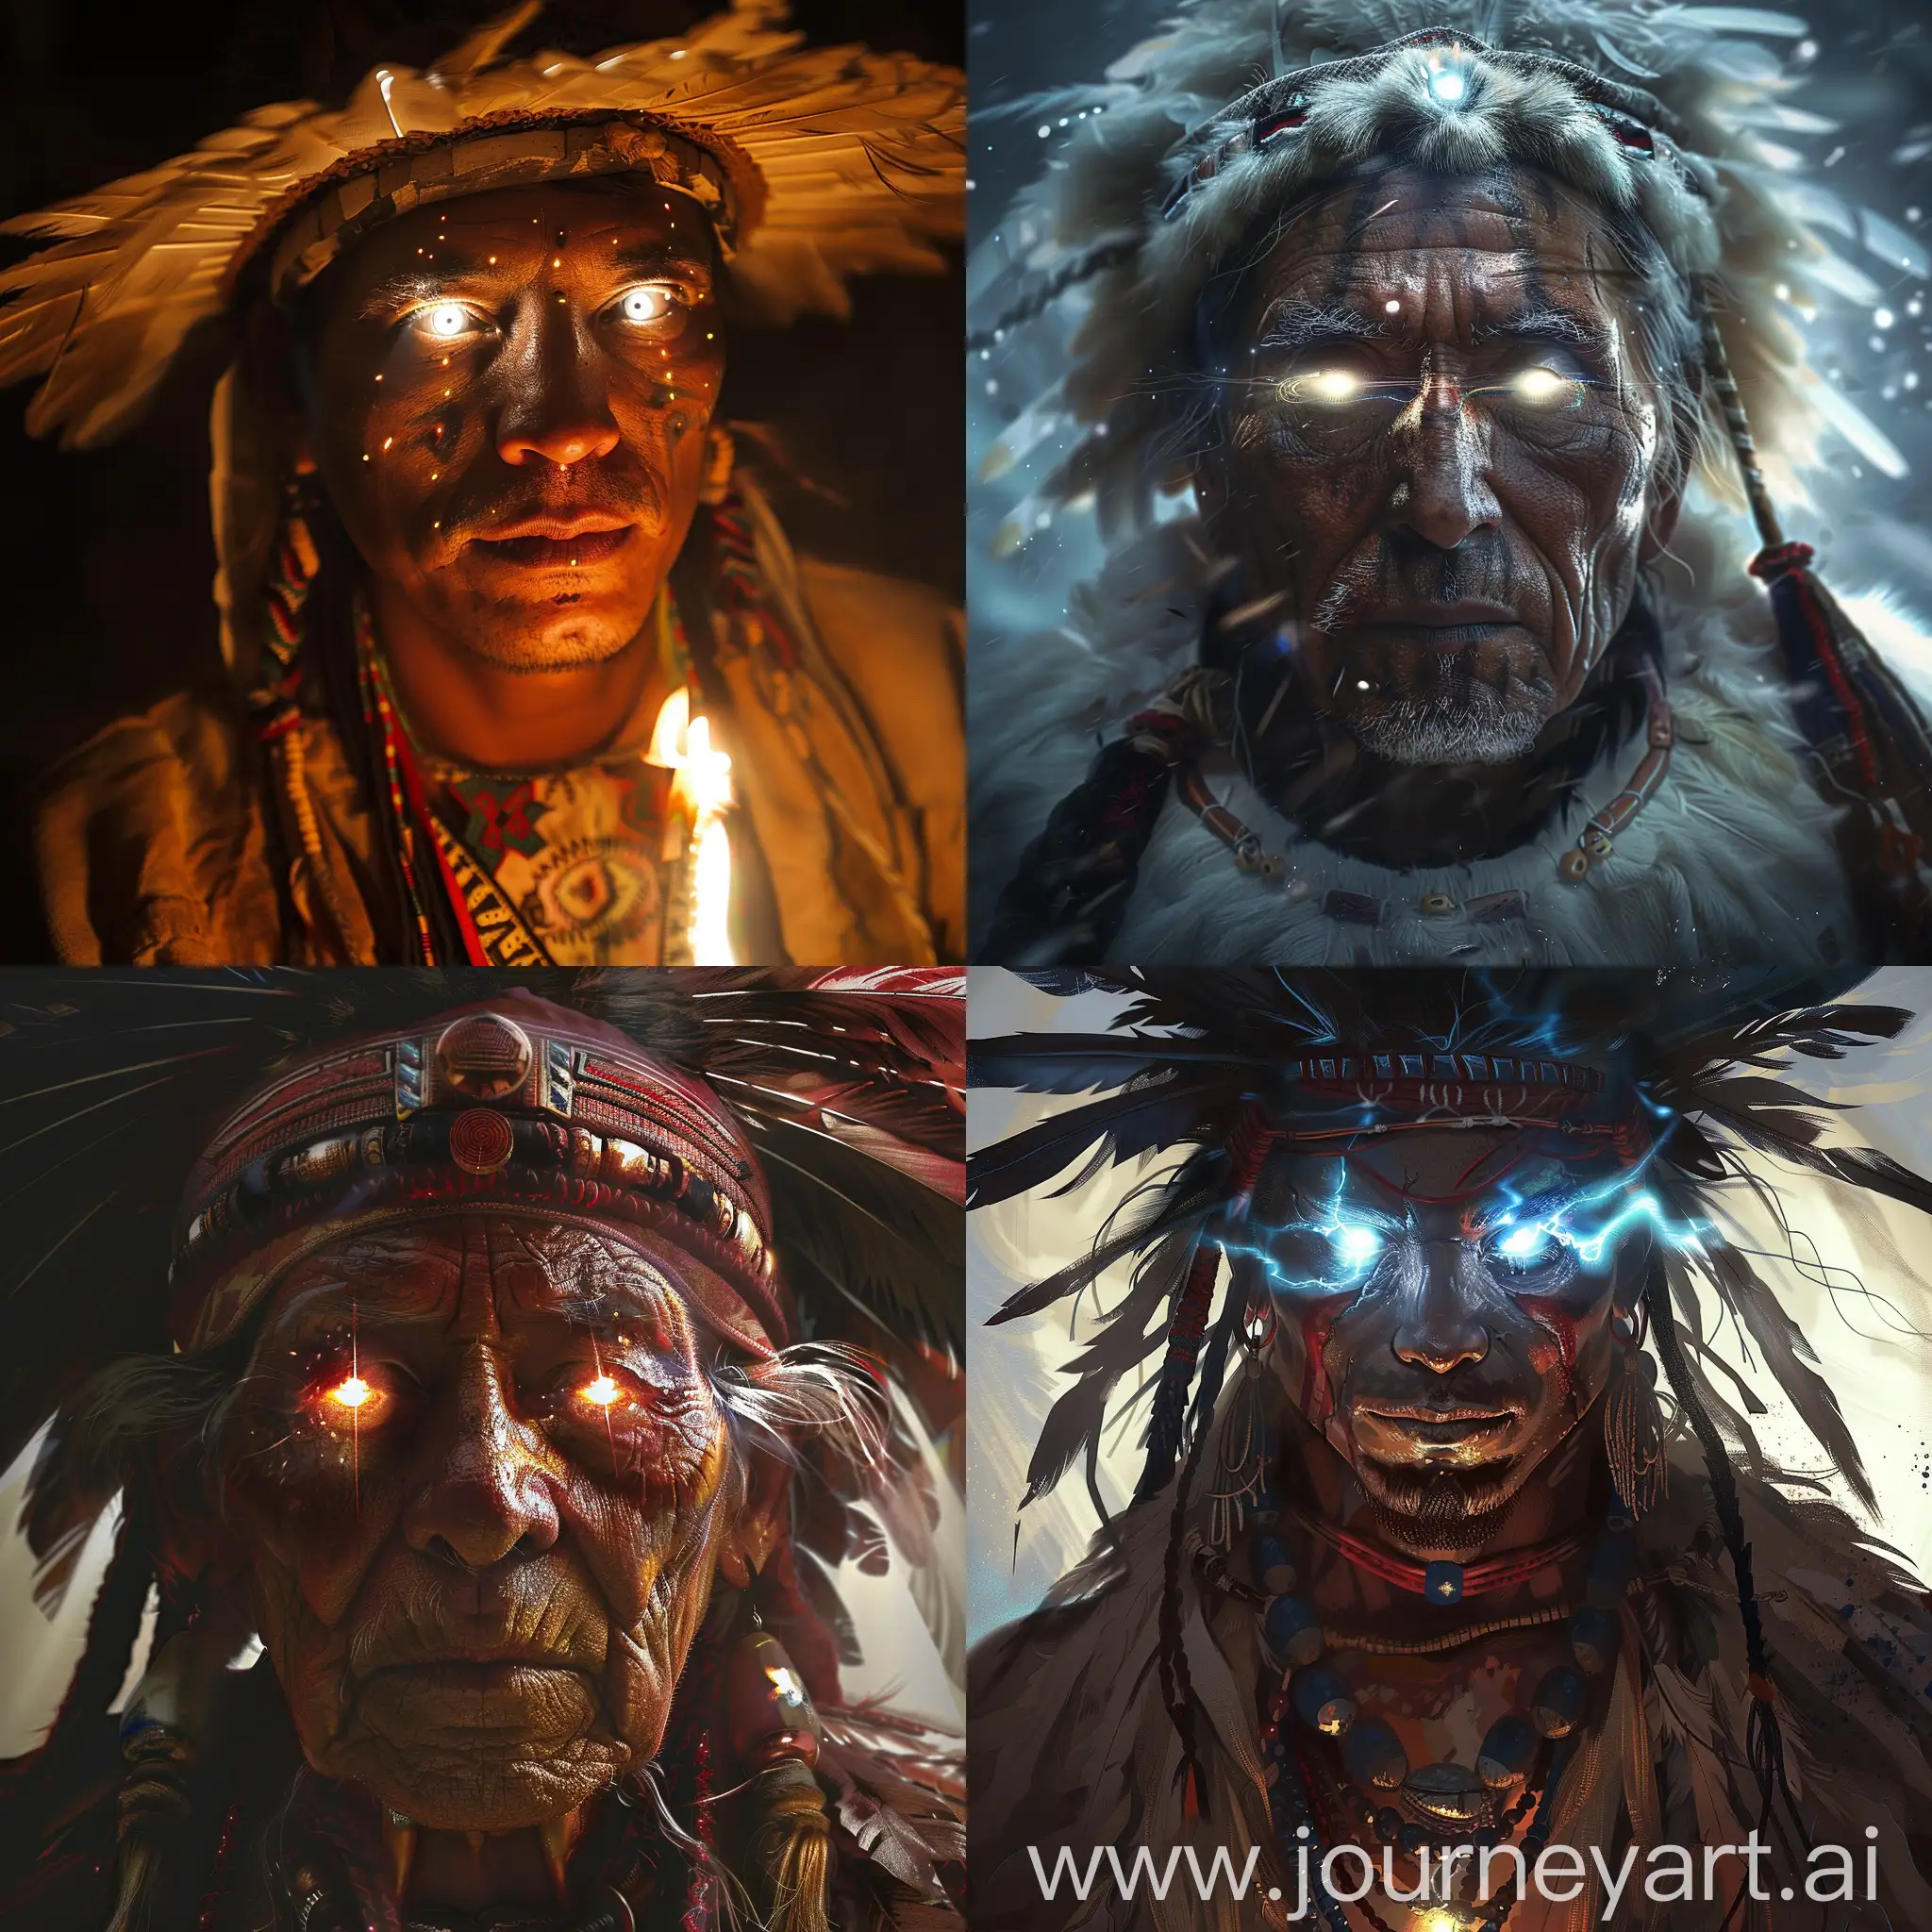 A male shaman whose eyes emit light